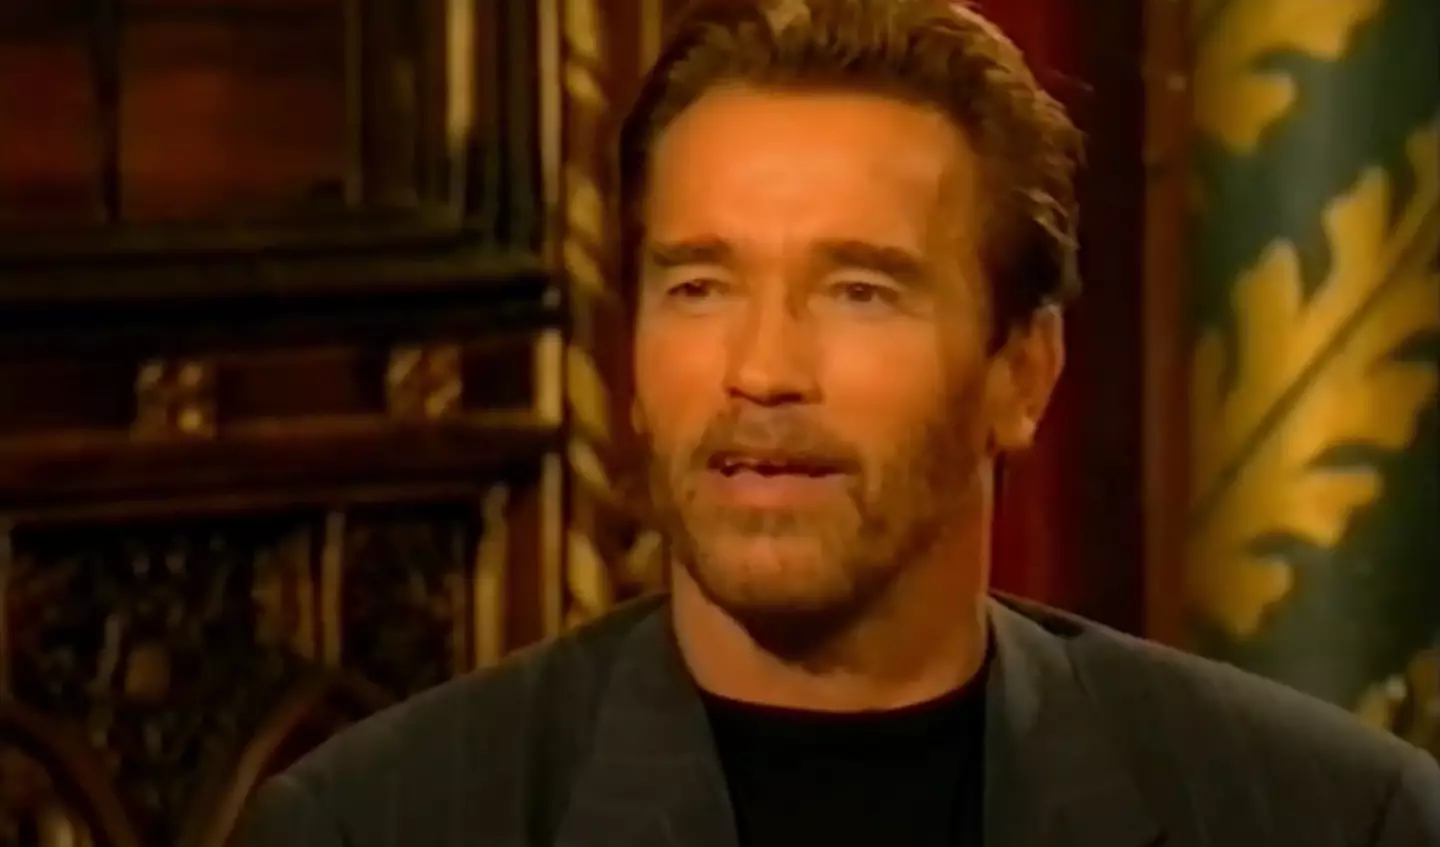 Schwarzenegger made his dreams come true.